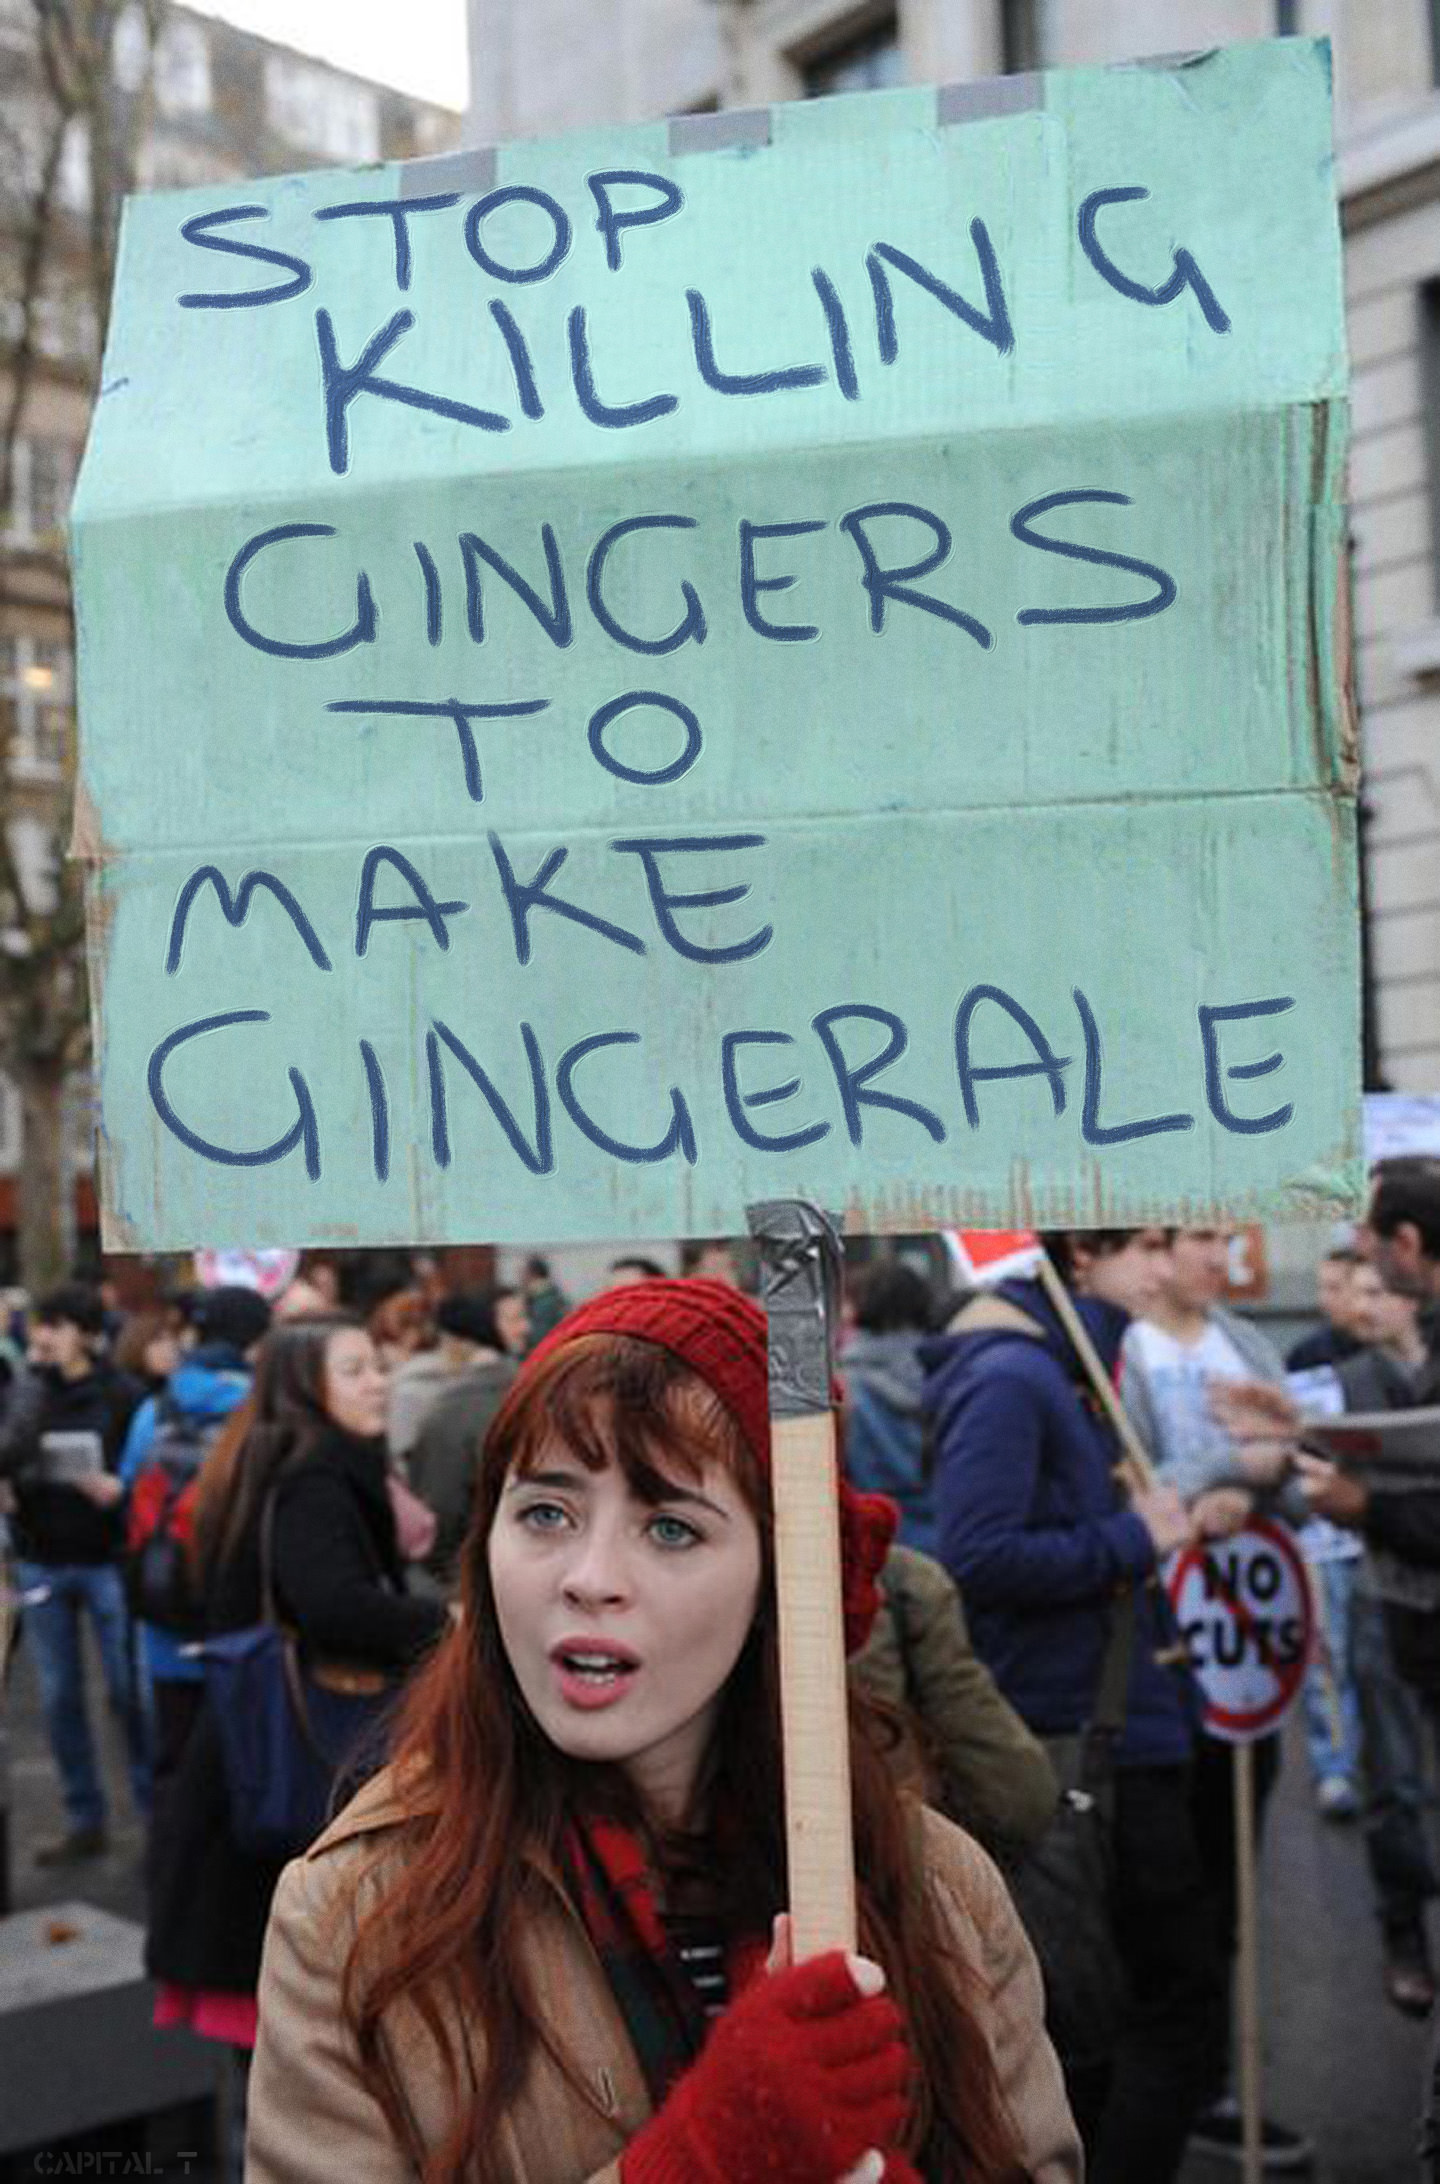 stop killing to make - Stop Killing Guingers To Make Gingerales